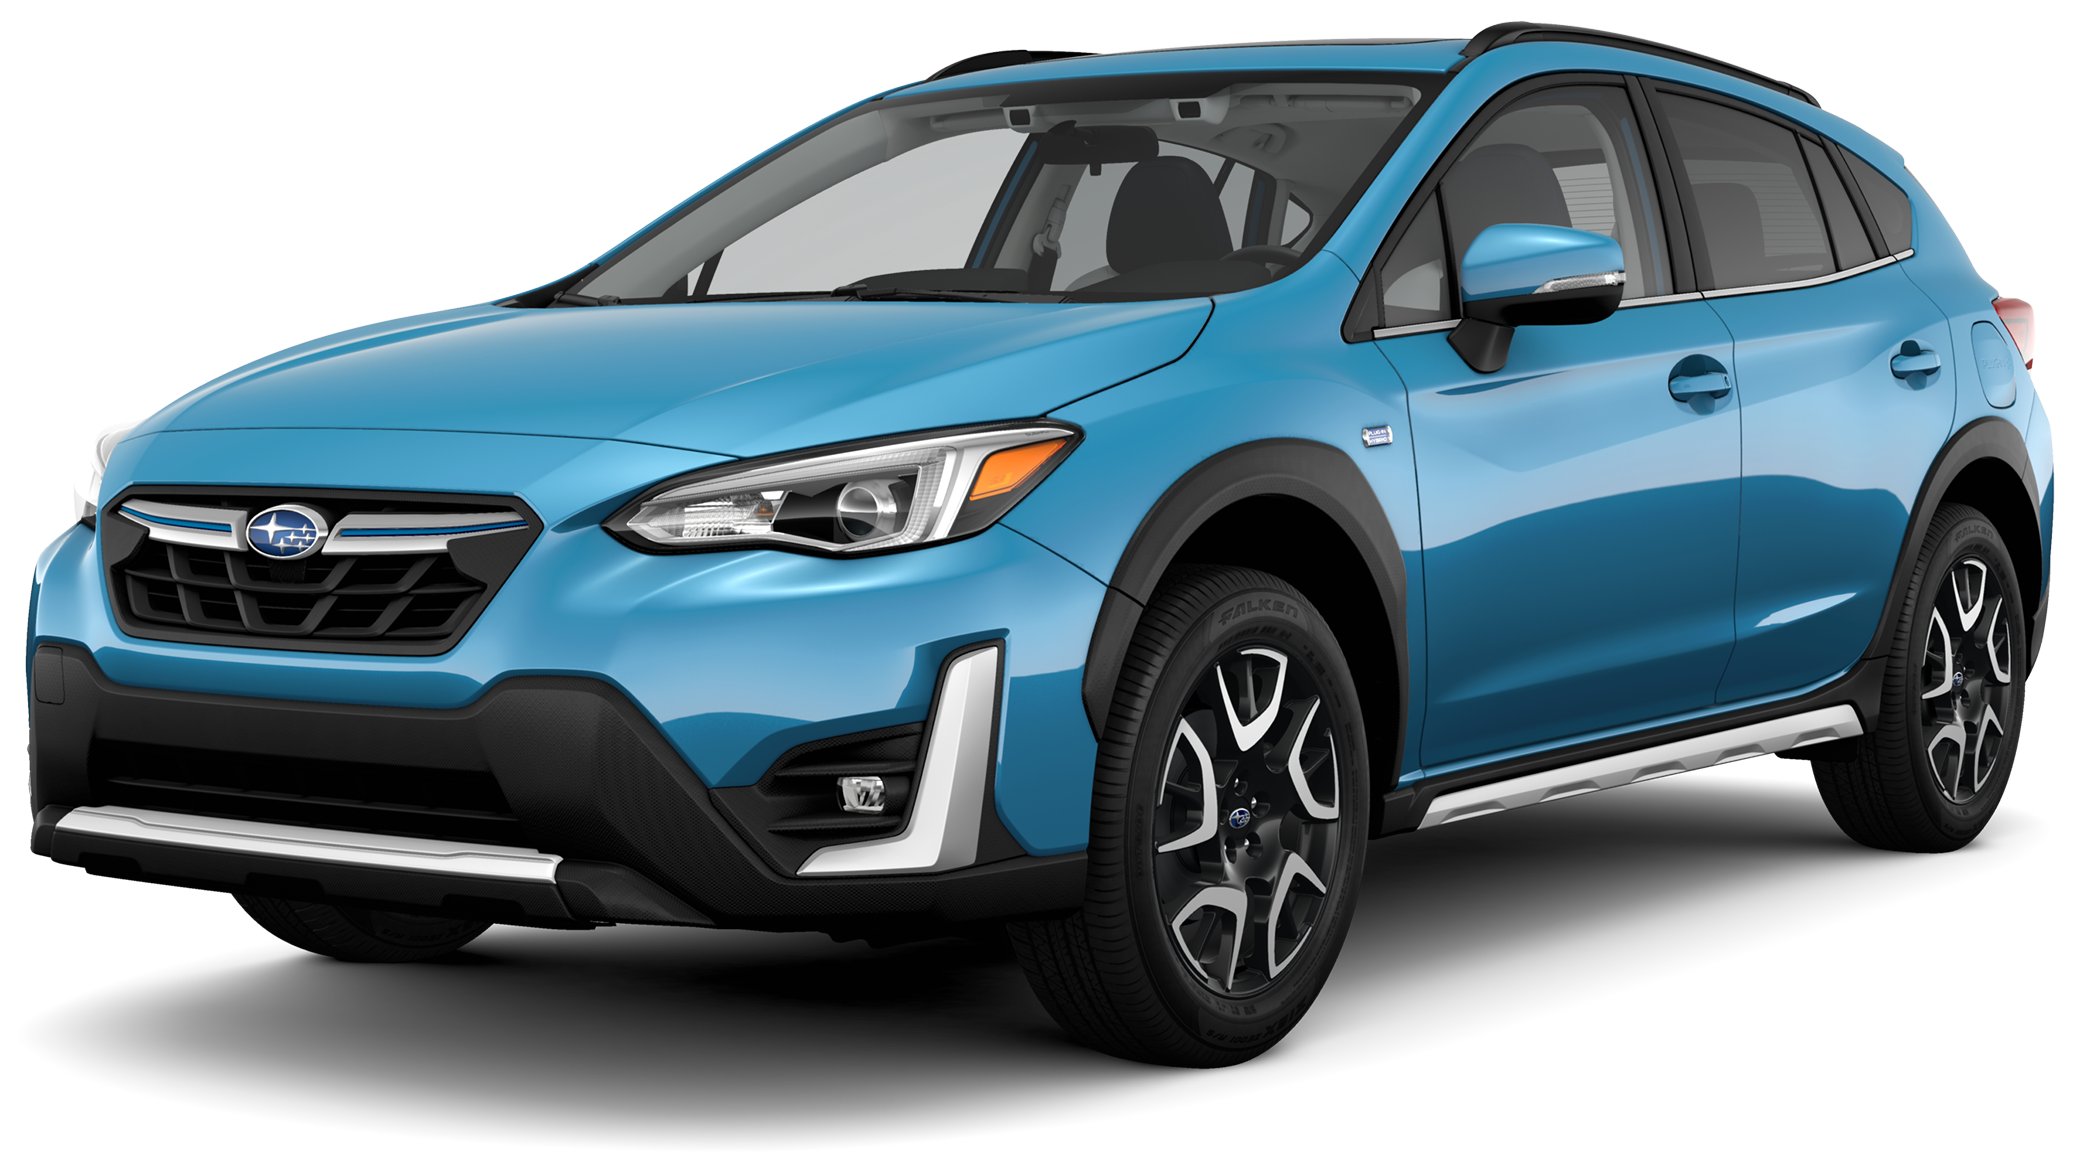 2021 Subaru Crosstrek Hybrid Incentives, Specials & Offers in Jenkintown PA